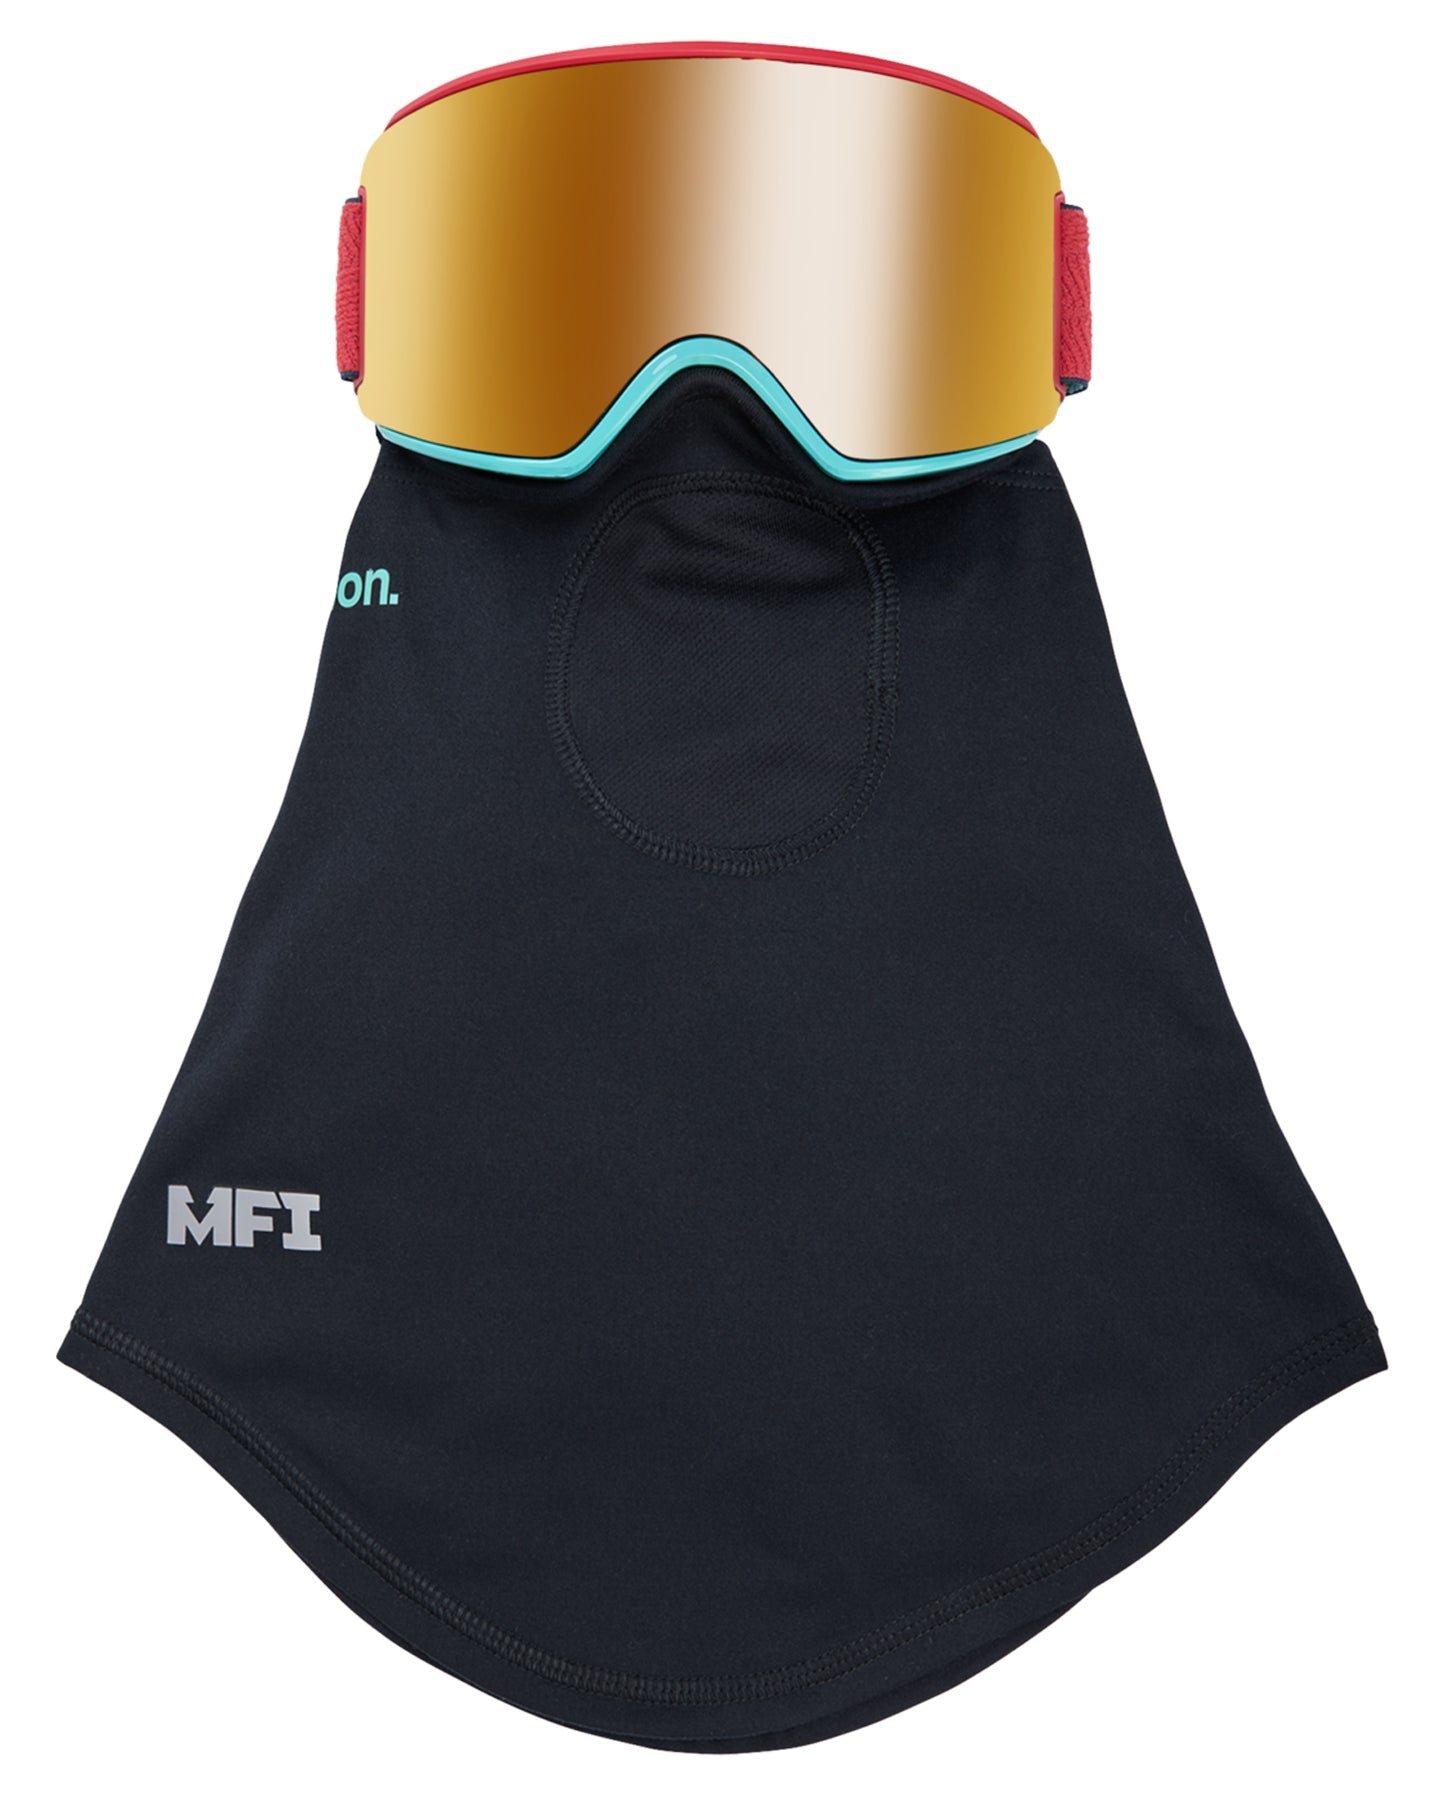 Anon WM3 Low Bridge Fit Snow Goggles + Bonus Lens + MFI - Coral / Perceive Sunny Bronze Women's Snow Goggles - Trojan Wake Ski Snow